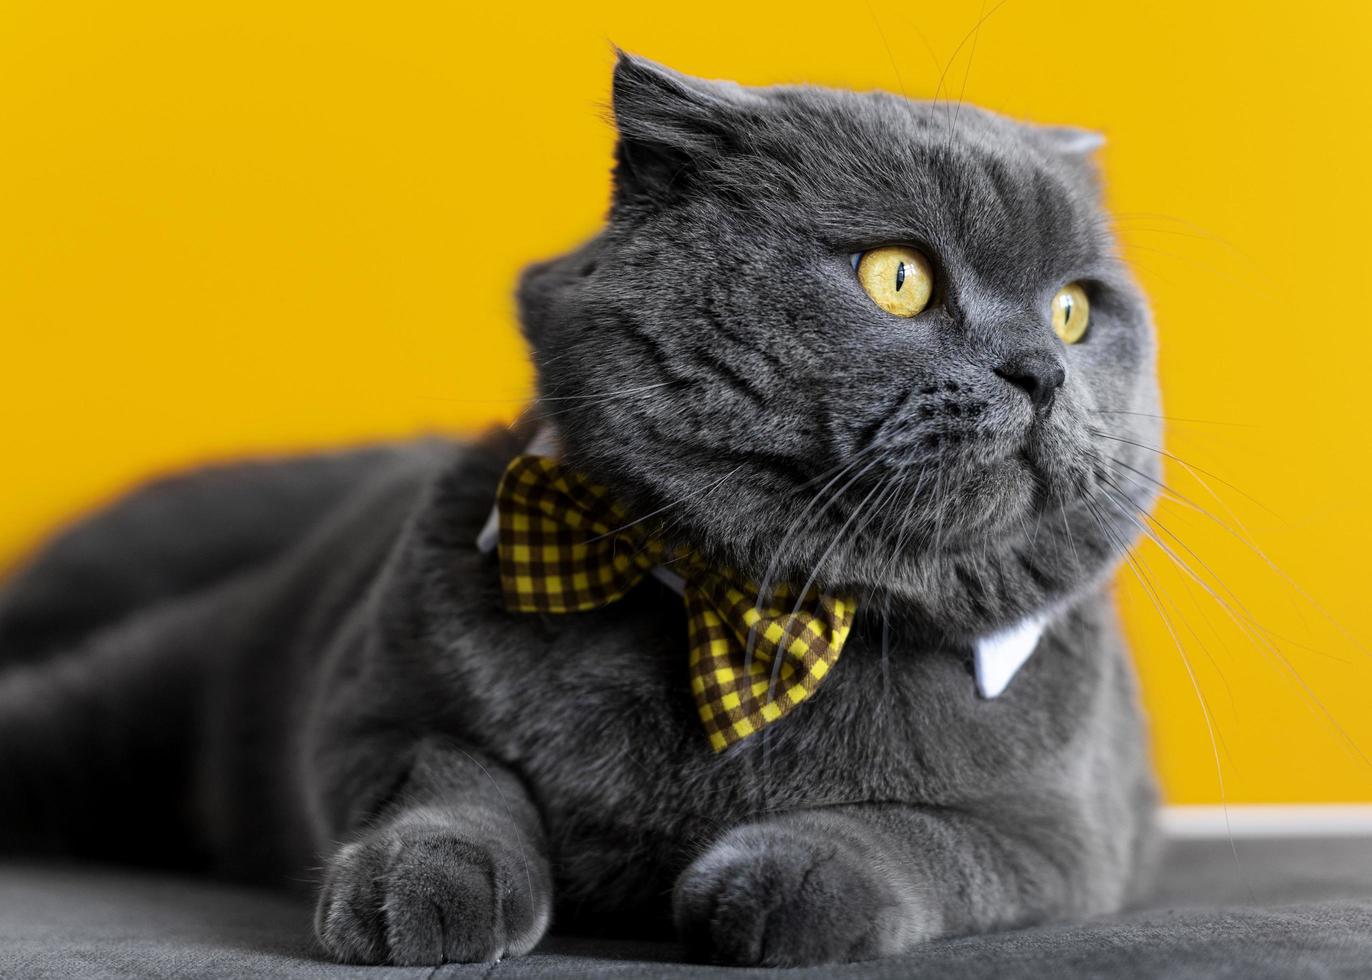 Cute grey cat wearing yellow bowtie photo